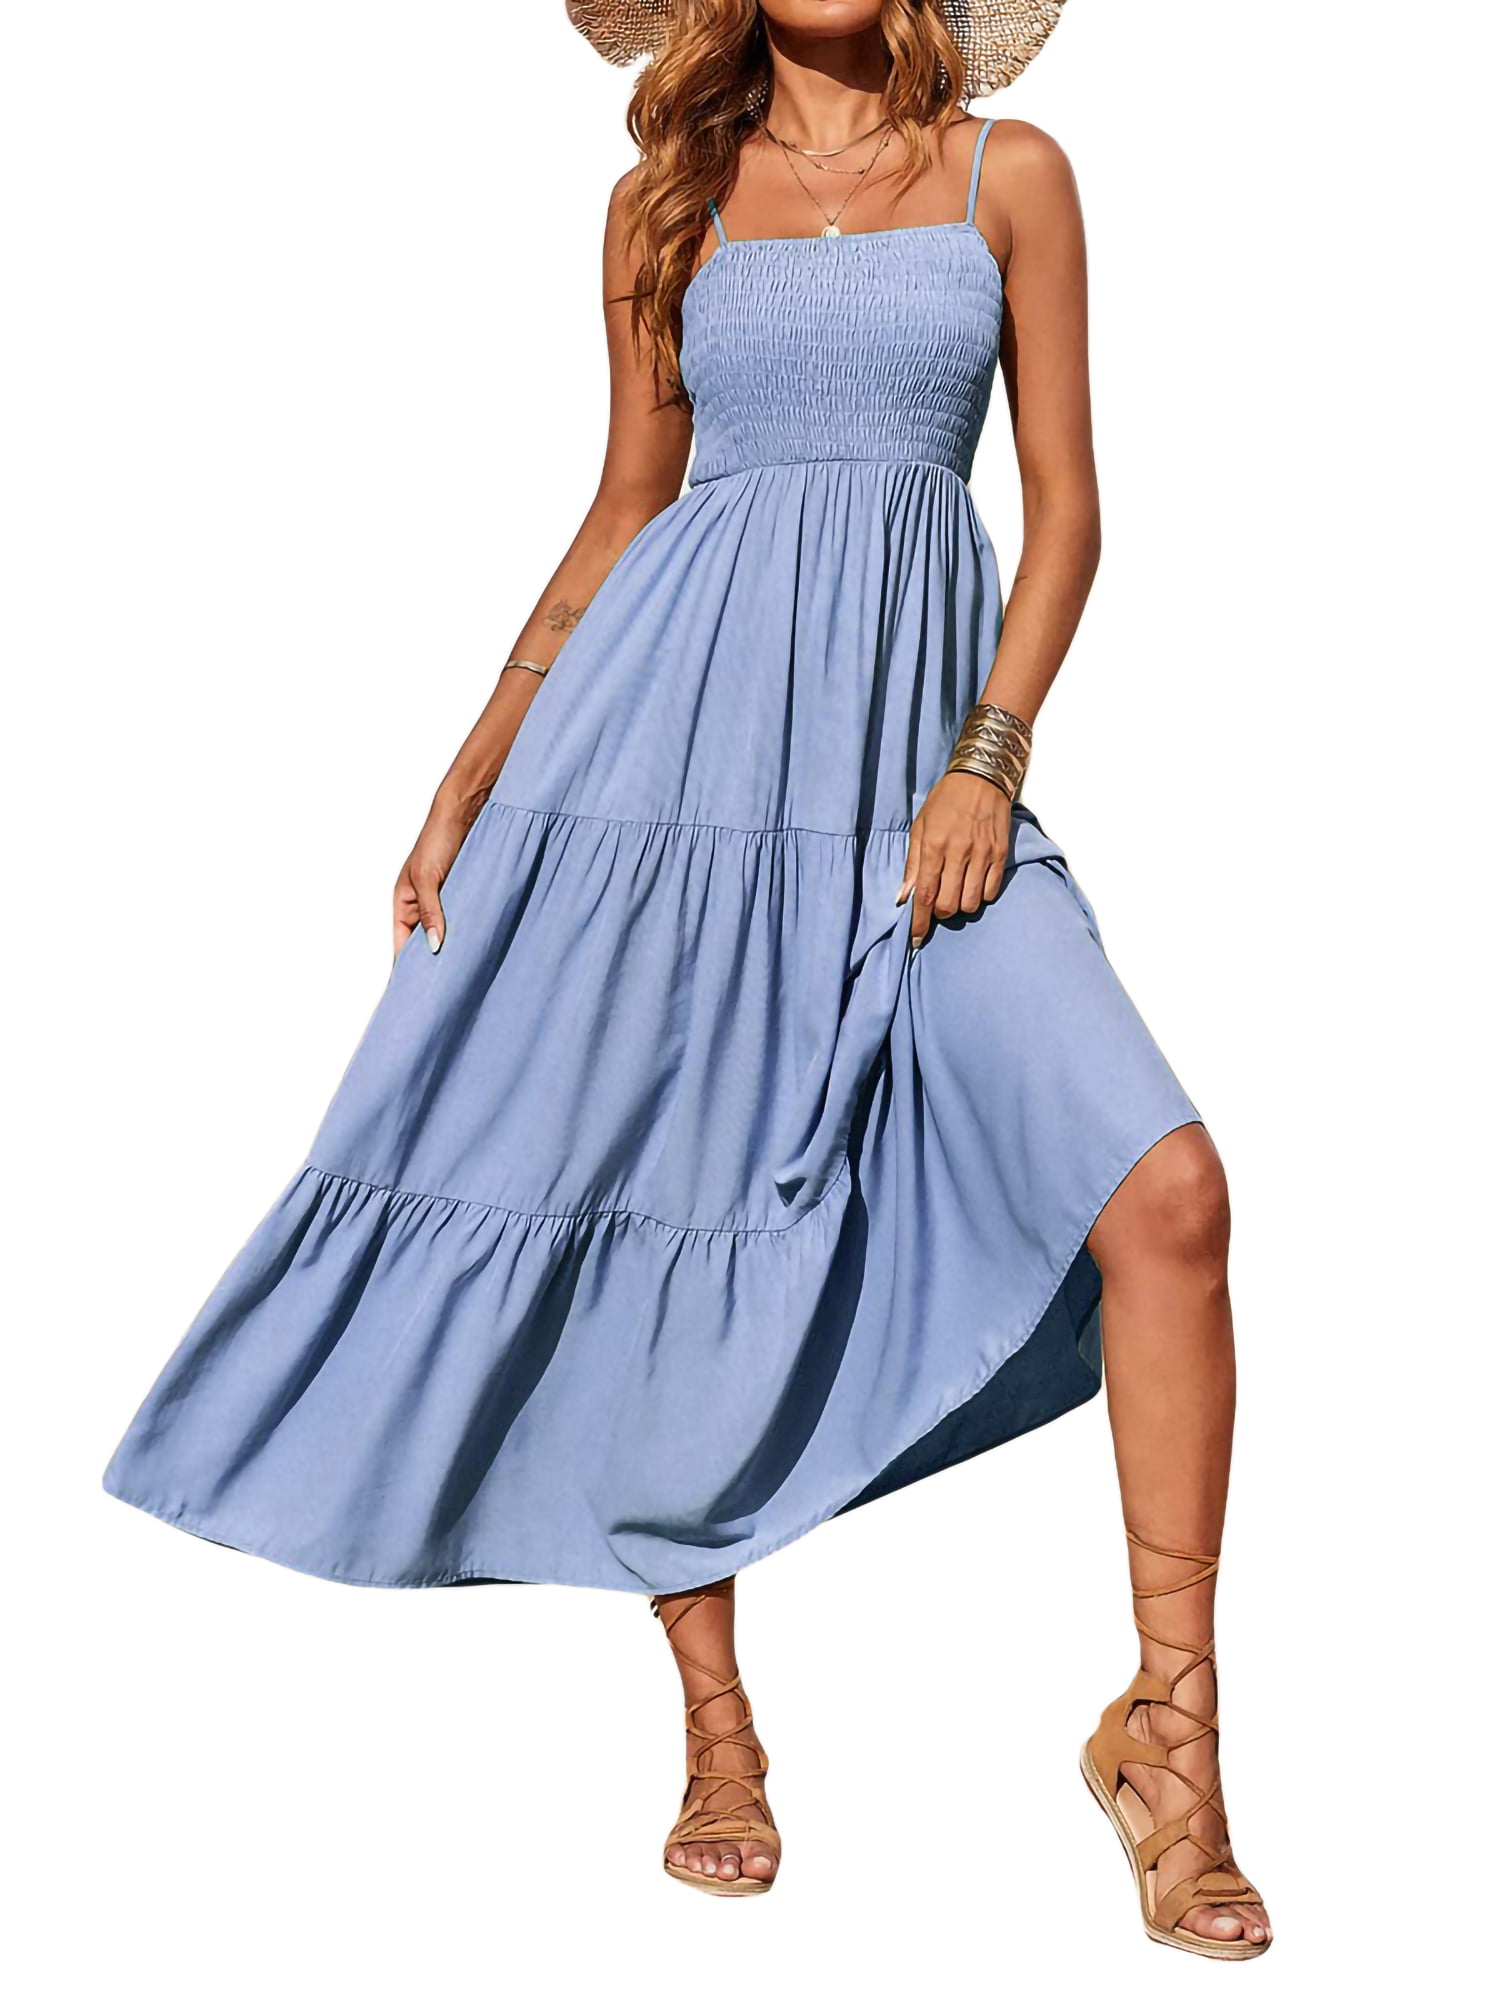 wybzd Women's Spaghetti Strap Maxi Dresses Smocked Dress Tube Top Skirt  Ruffle Hem Square Neck A Line Backless Sundress Blue M